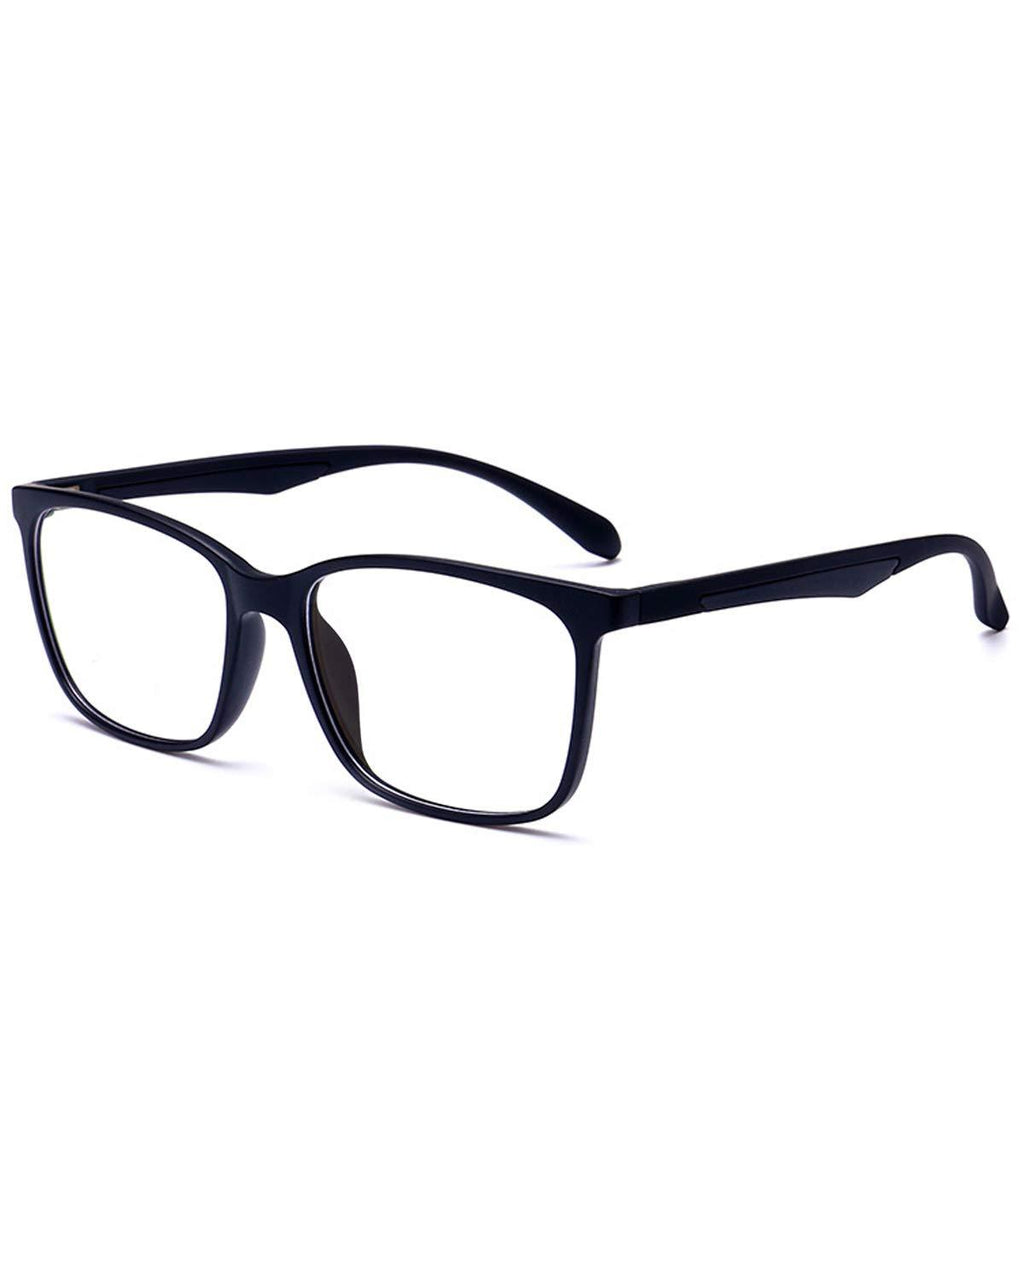  [AUSTRALIA] - ANRRI Blue Light Blocking Glasses Lightweight Eyeglasses Frame Filter Blue Ray Computer Game Glasses Classic Black